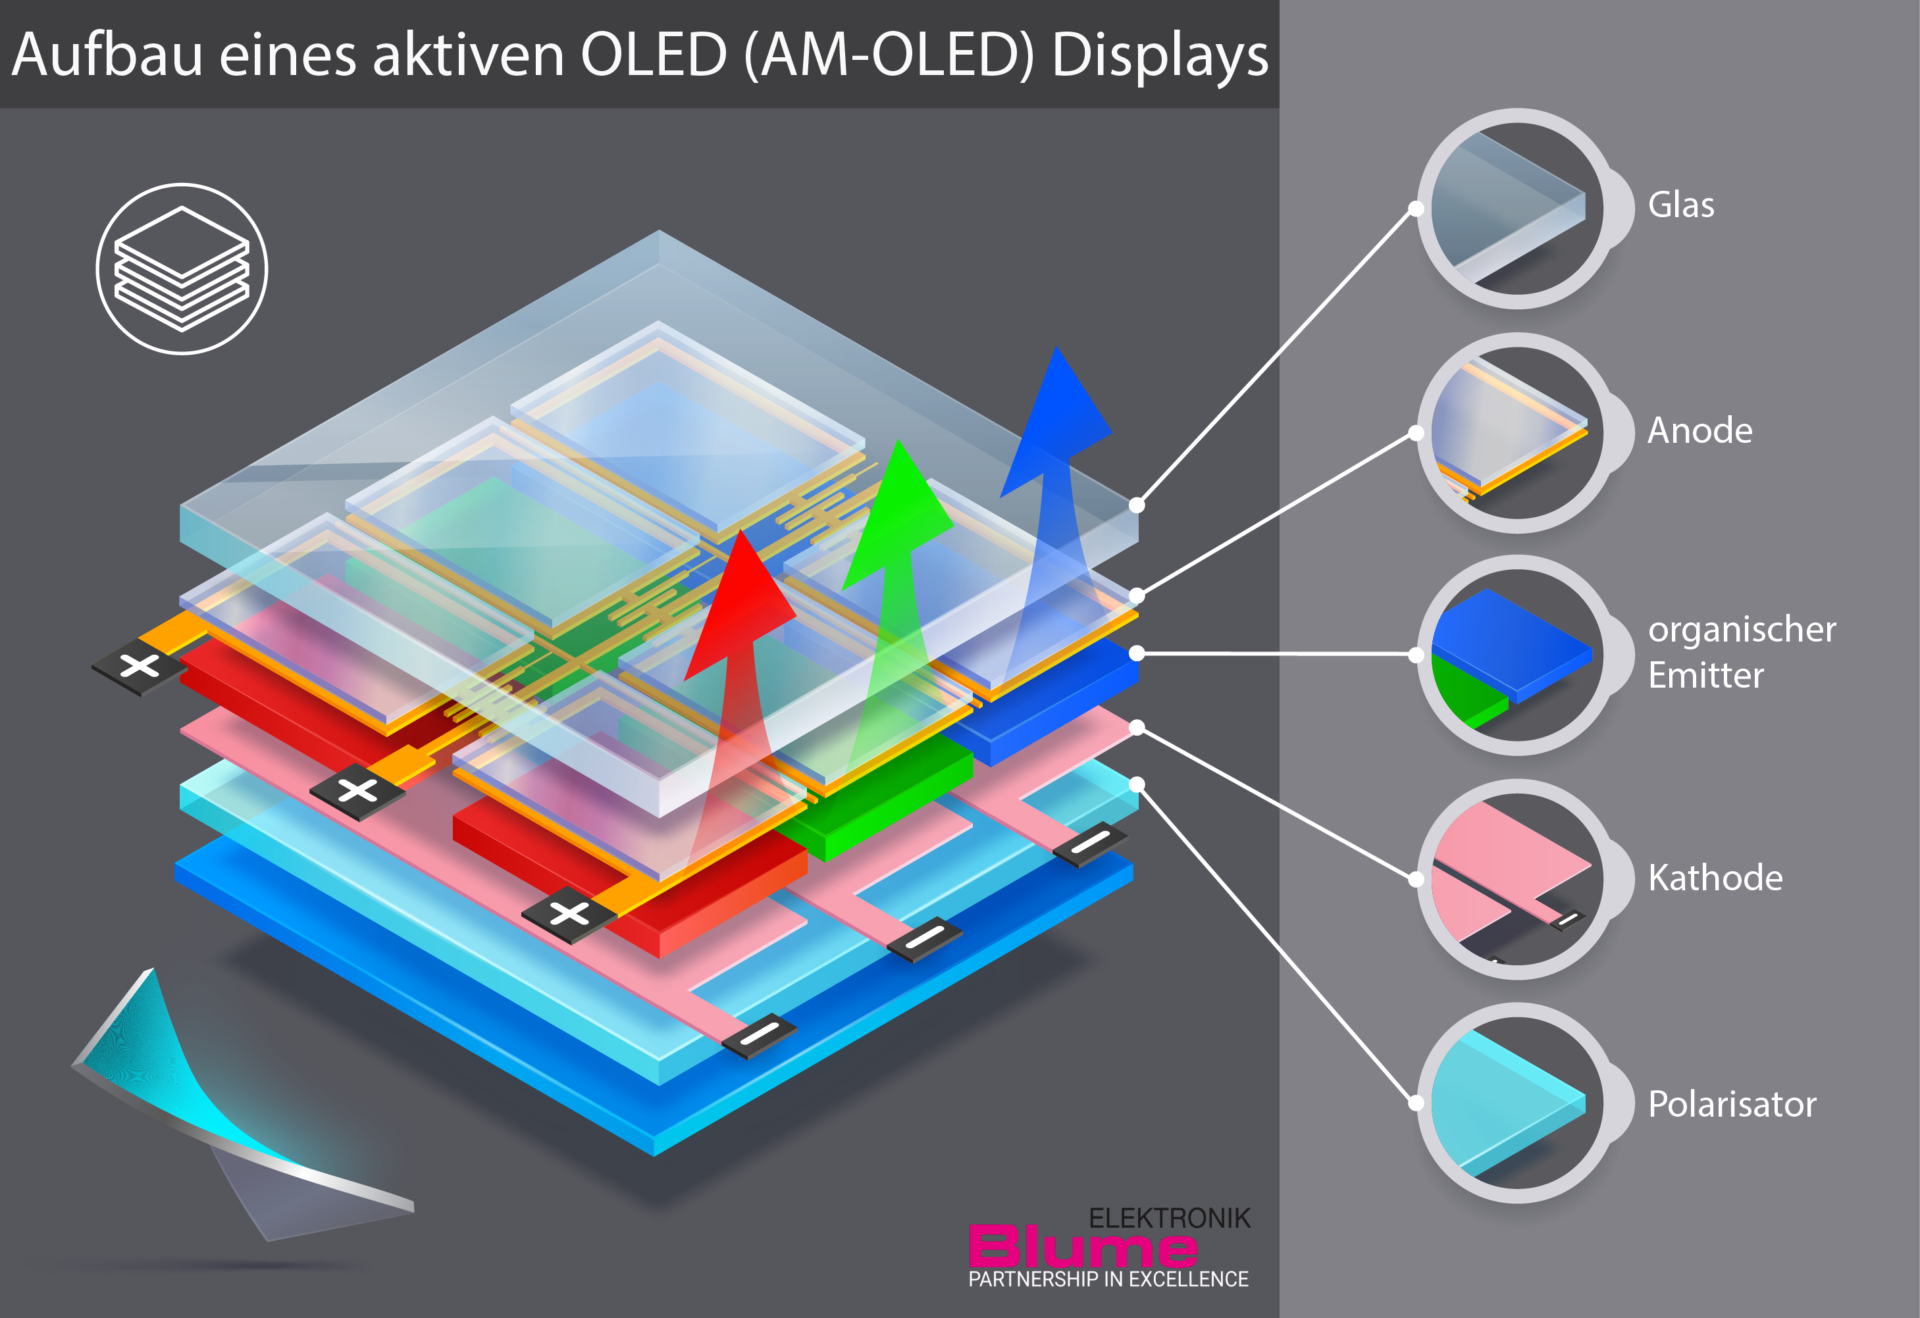 Aufbau eines aktiven OLED (AM-OLED) Displays